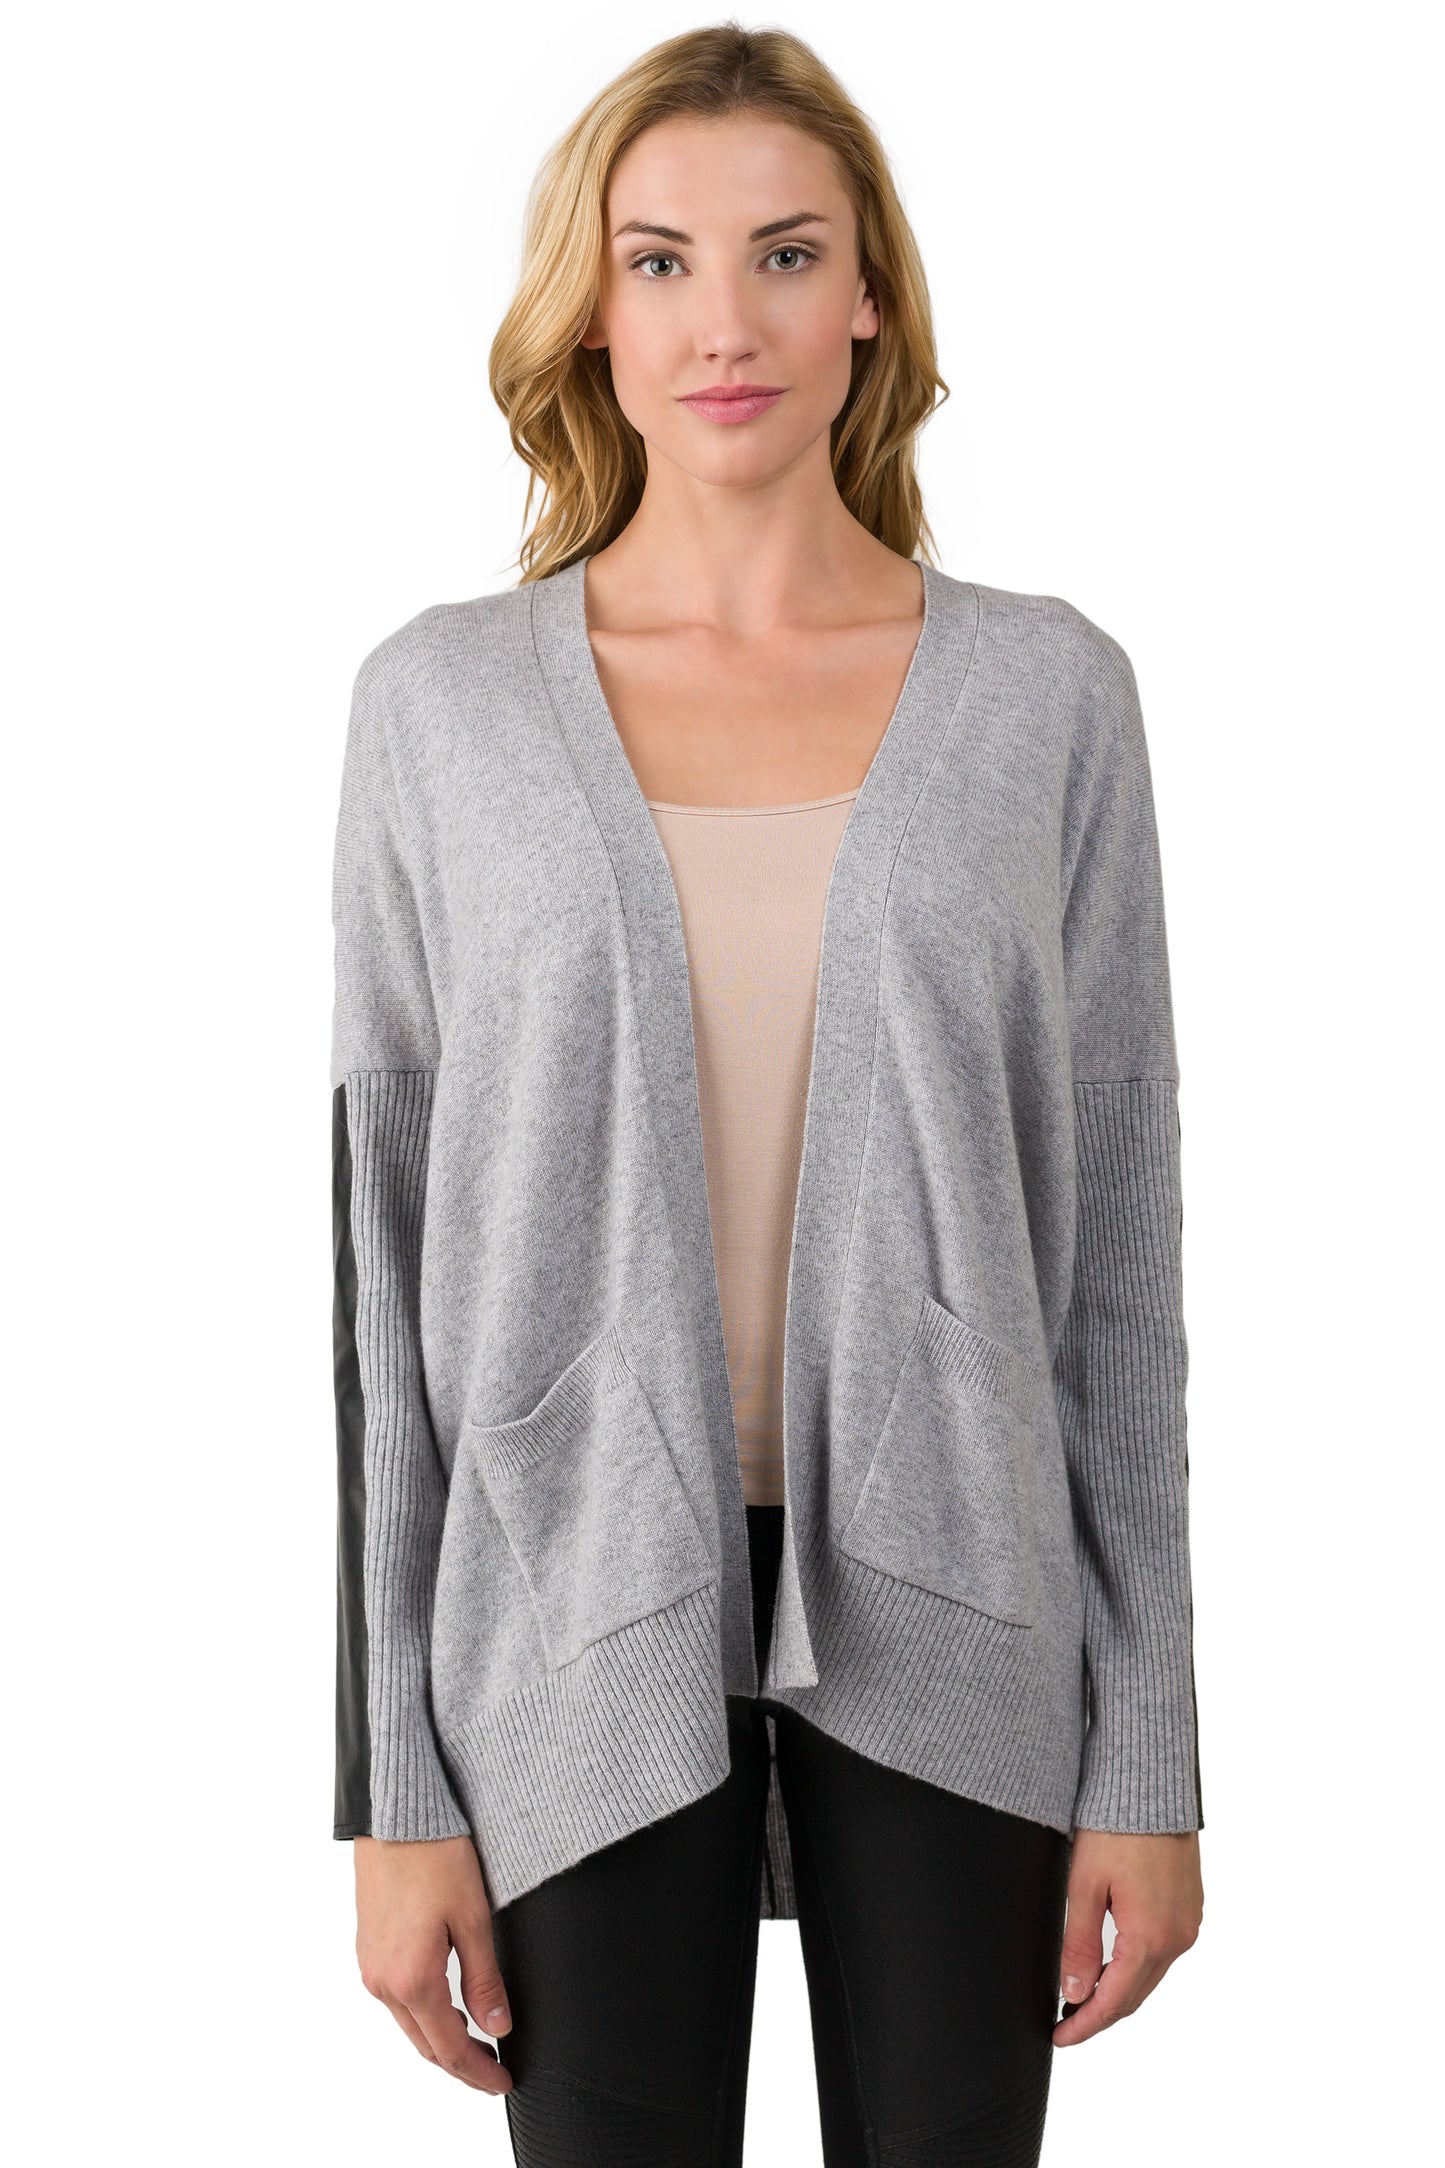 J CASHMERE Women's 100% Cashmere Long Sleeve leather Dolman Cardigan Sweater